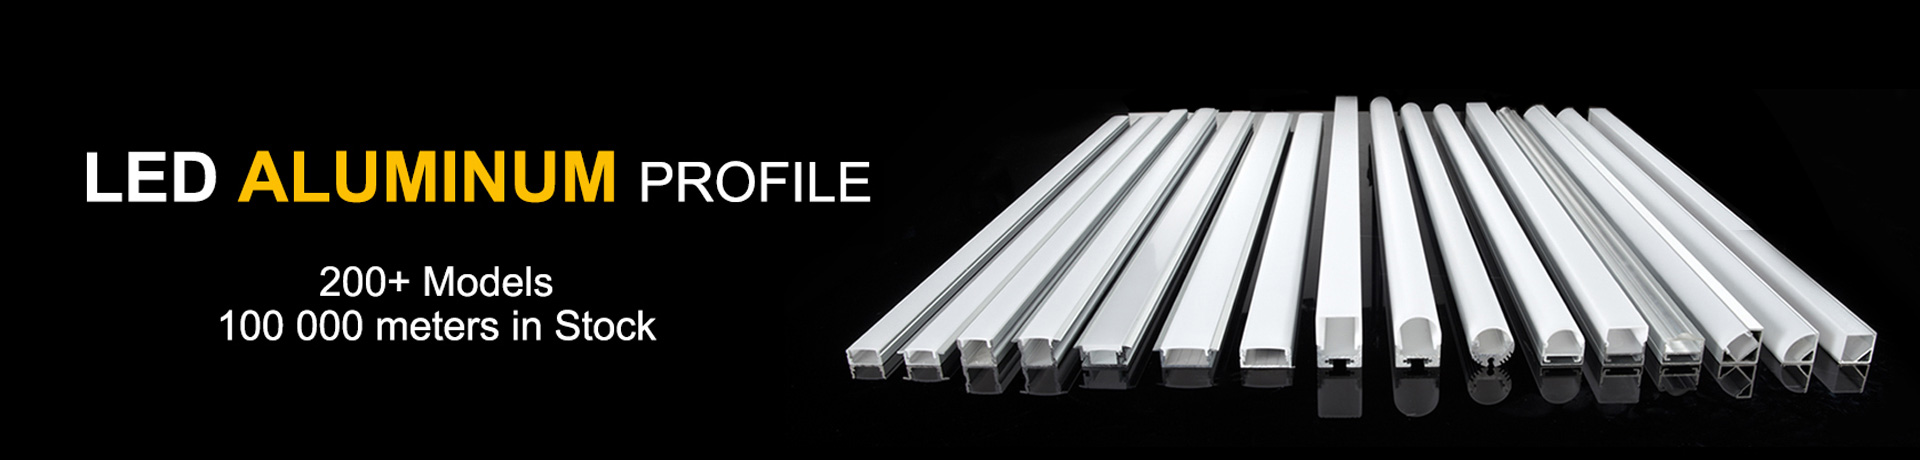 led aluminium profiel - aluminium kanaal - aluminium profiel voor ledstripverlichting